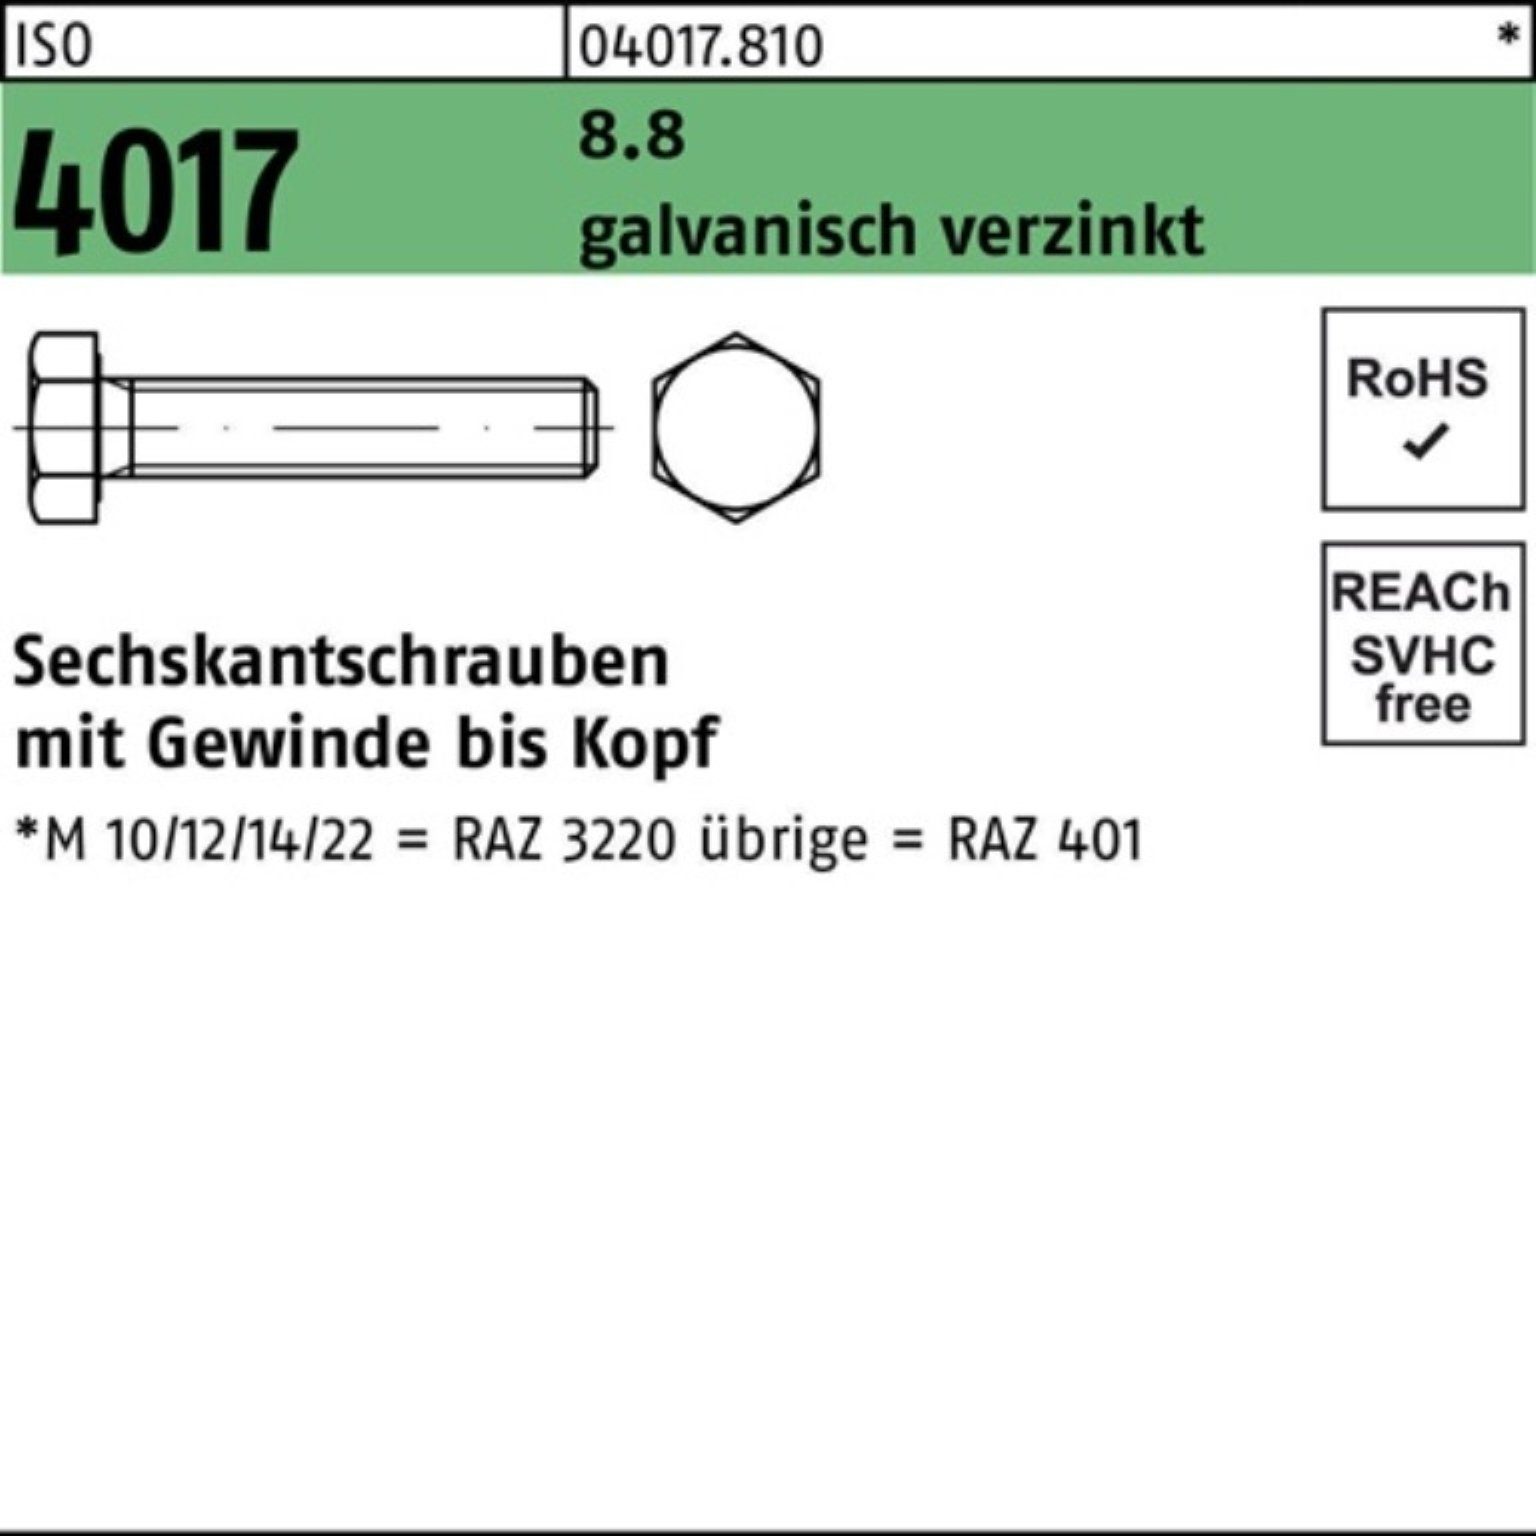 Bufab Sechskantschraube 100er Pack M36x 4017 VG St 8.8 1 galv.verz. ISO Sechskantschraube 150